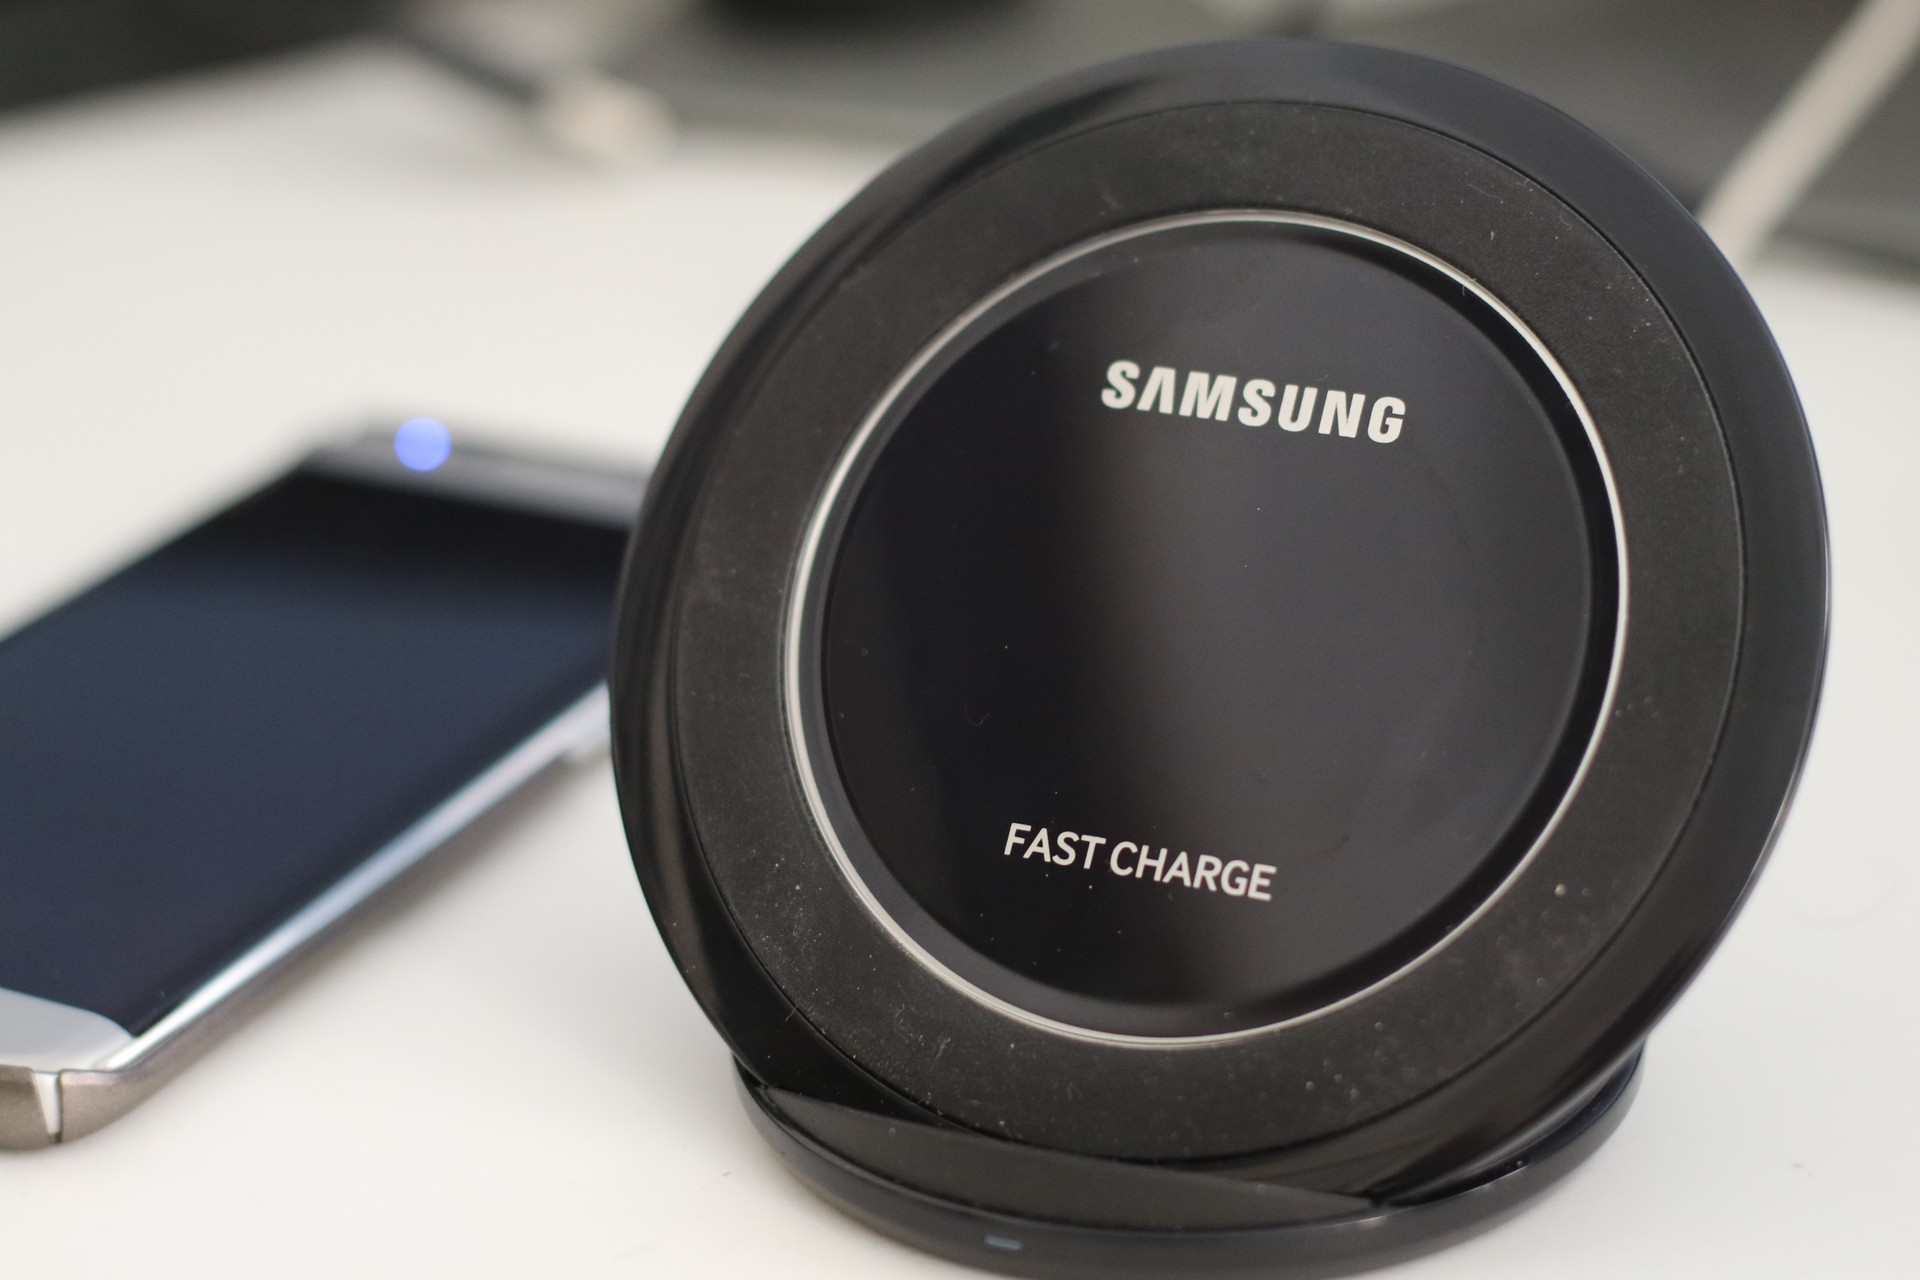 Samsung Wireless Charger. Samsung fast charge. Samsung Wireless Charging. Беспроводная зарядка Samsung fast charge. Модели самсунг с беспроводной зарядкой